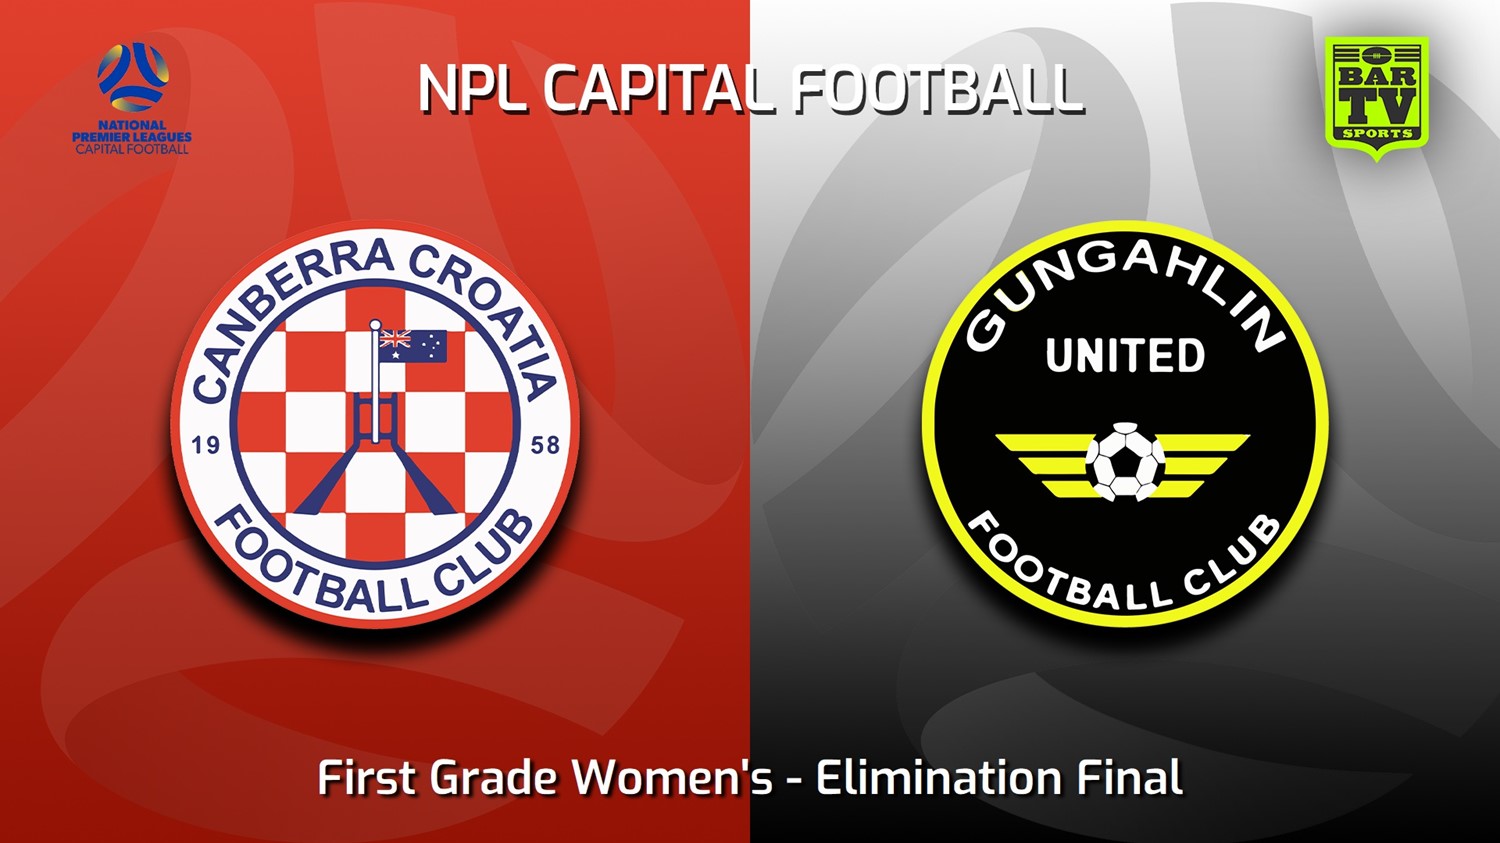 230914-NPL Women - 1st Grade - Capital Football Finals Elimination Final - Canberra Croatia FC (women) v Gungahlin United FC (women) Minigame Slate Image